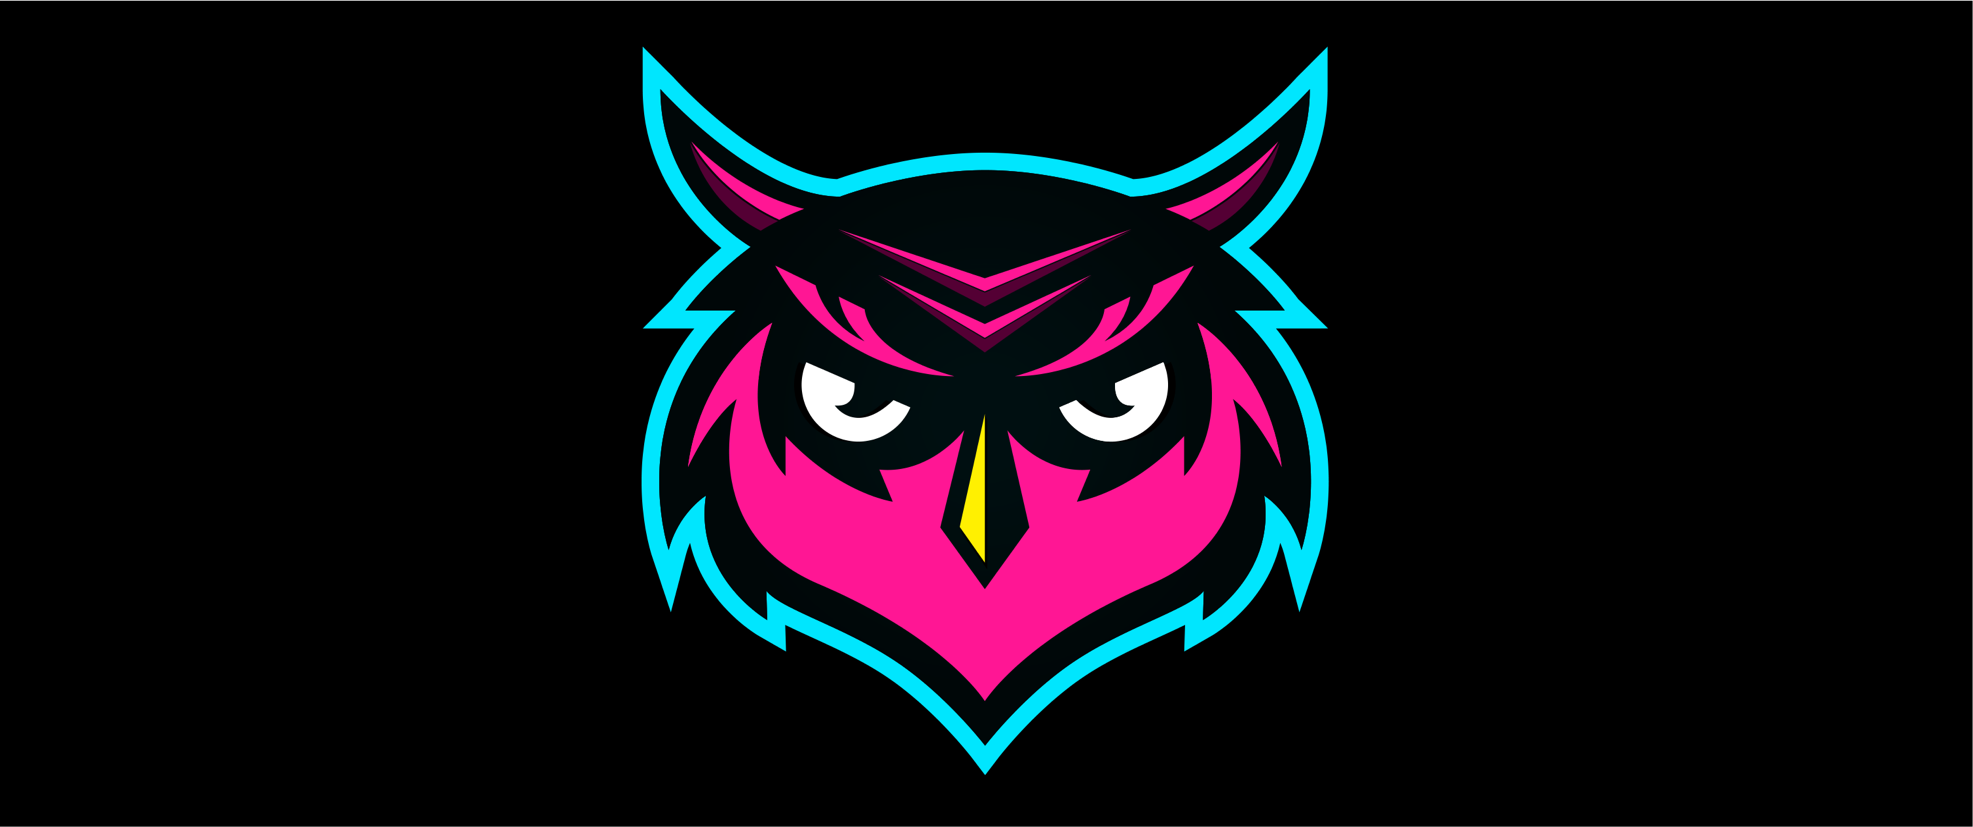 The Math Class logo: a pink and blue owl